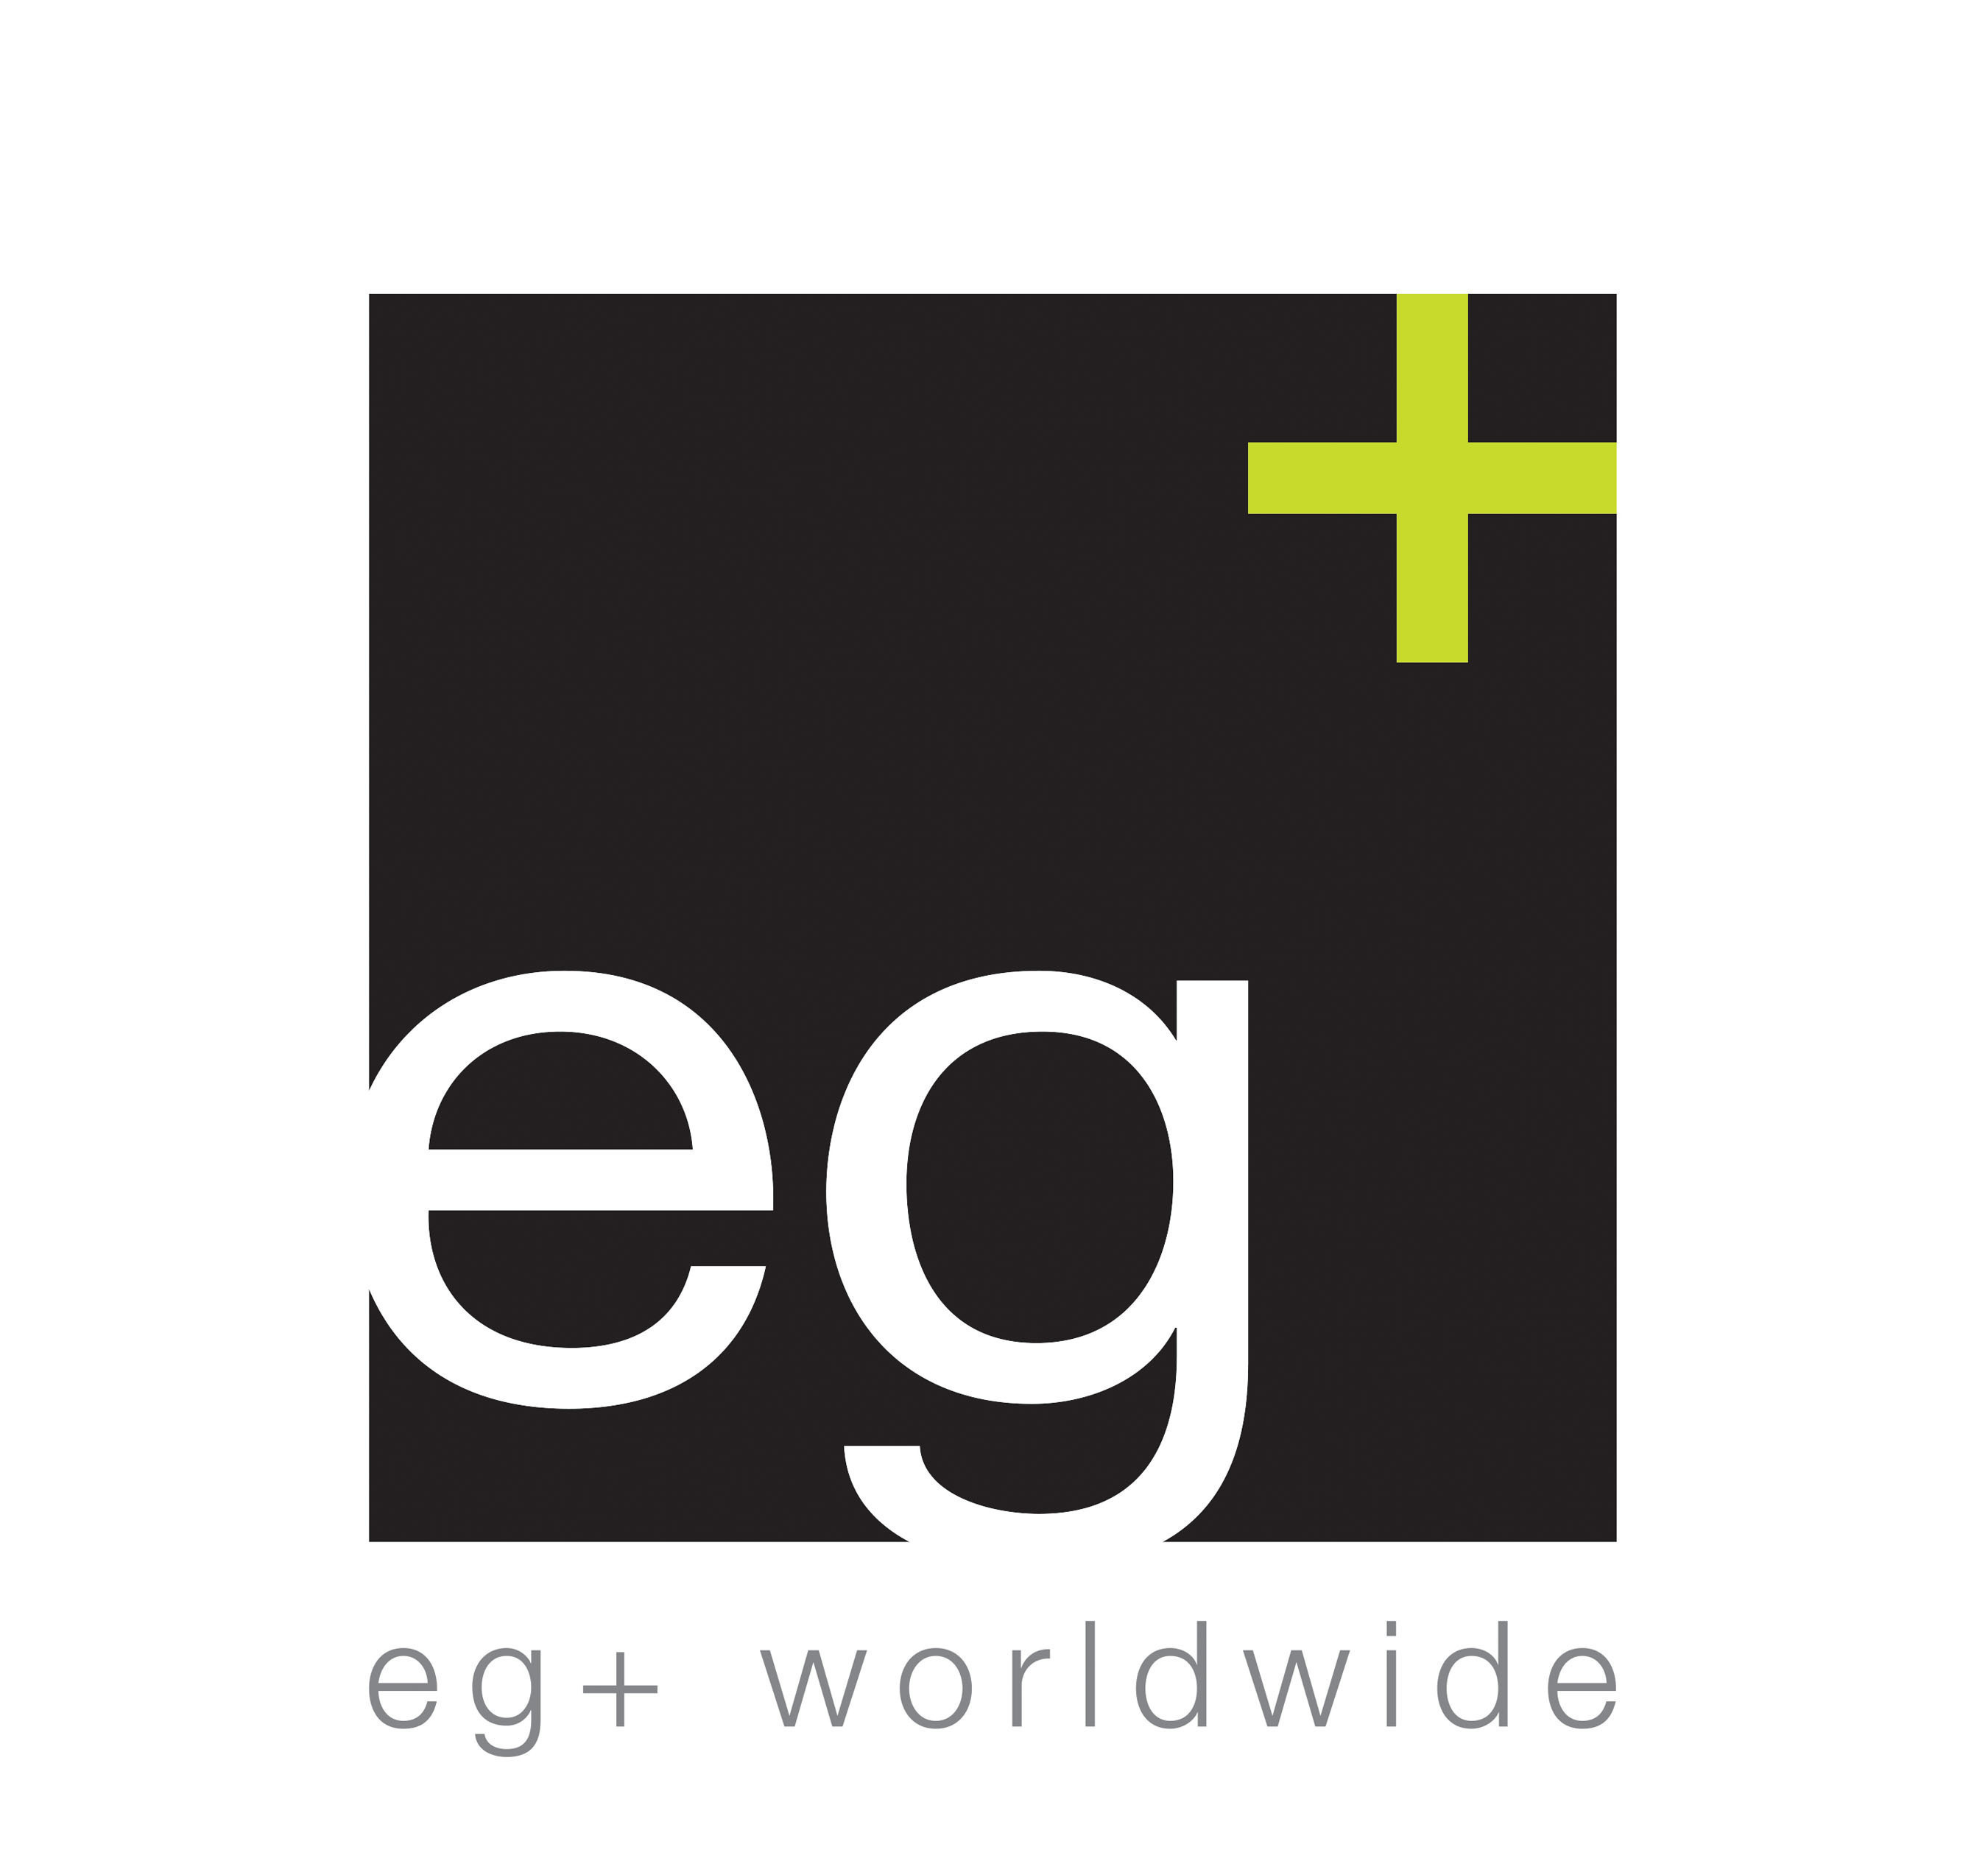 eg logo. (PRNewsFoto/Omnicom Group) (PRNewsFoto/OMNICOM GROUP)